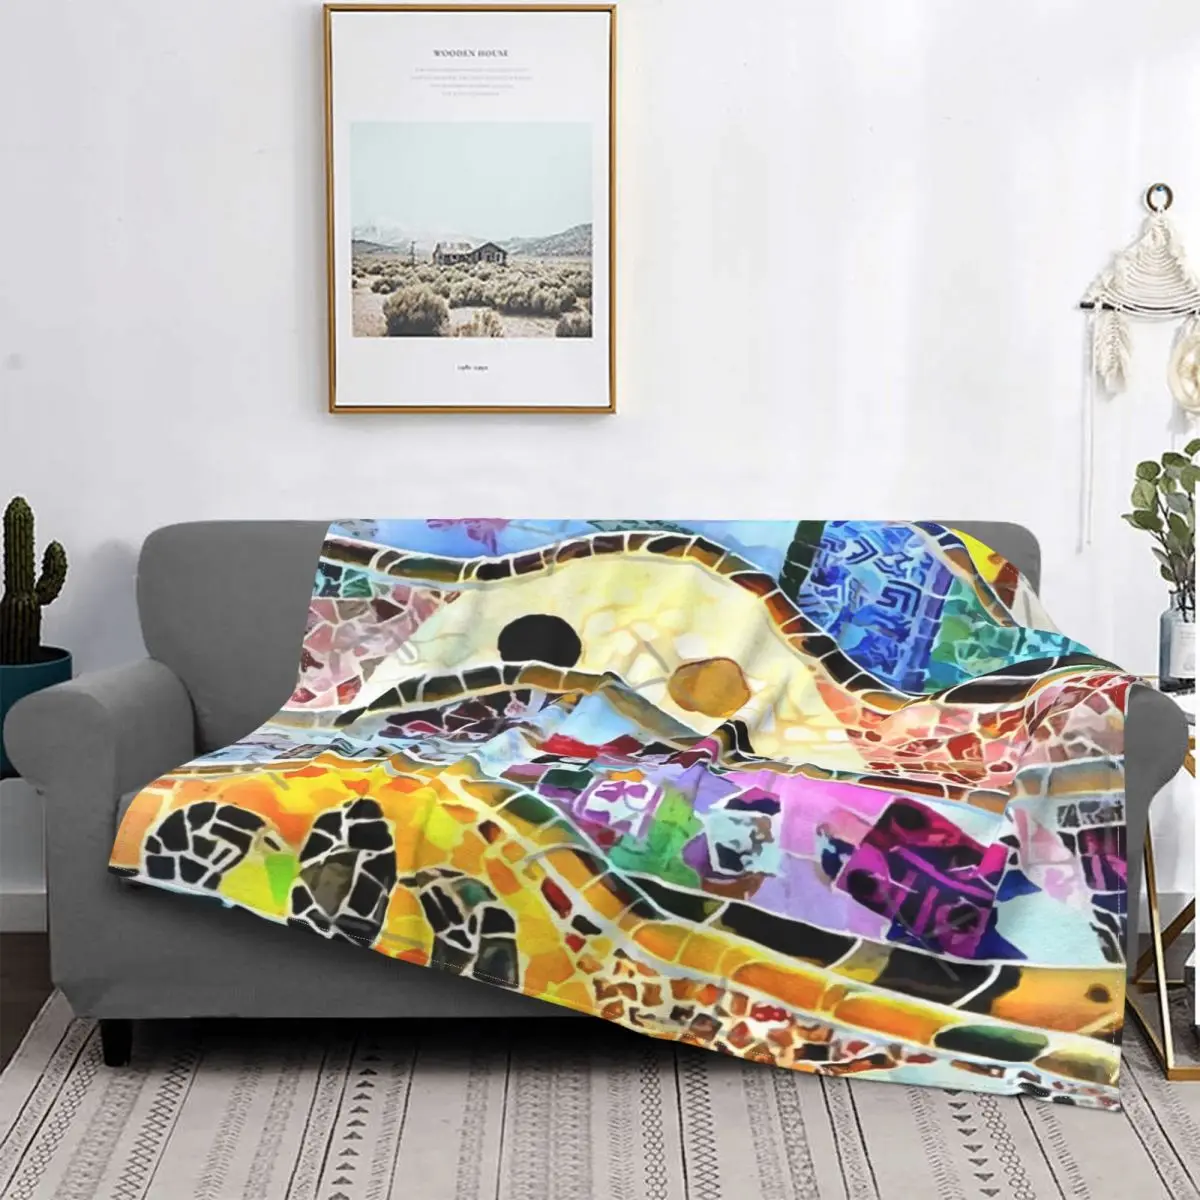 

Manta de mosaico de Barselona, edredón a cuadros para cama, de verano, 1 manta